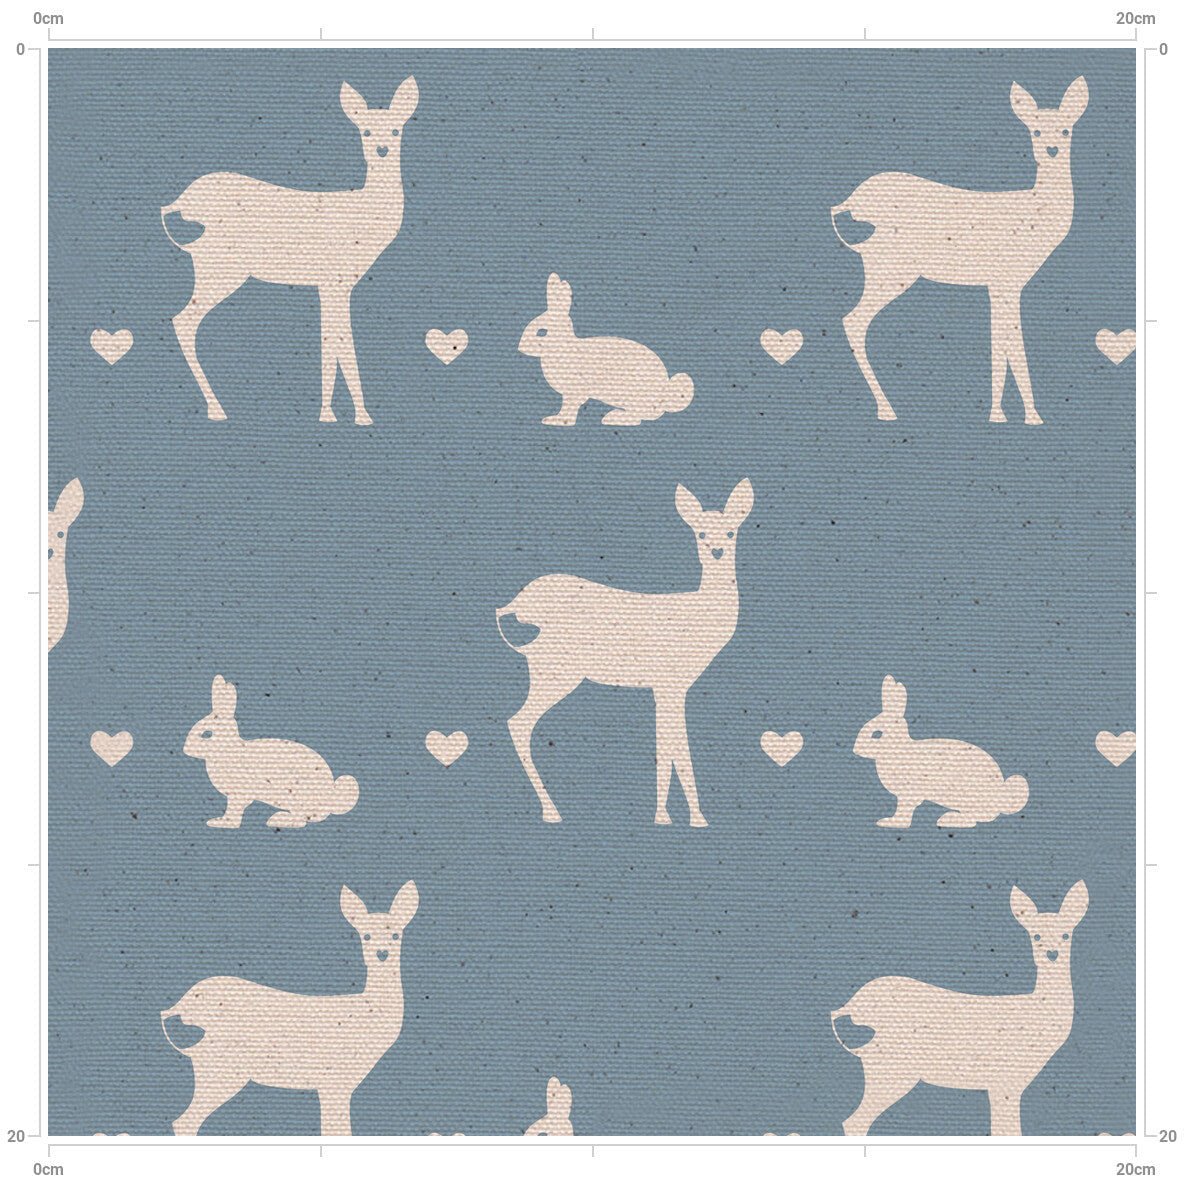 Deer & Rabbit Solid Background - F&B Crafts - F&B Designs